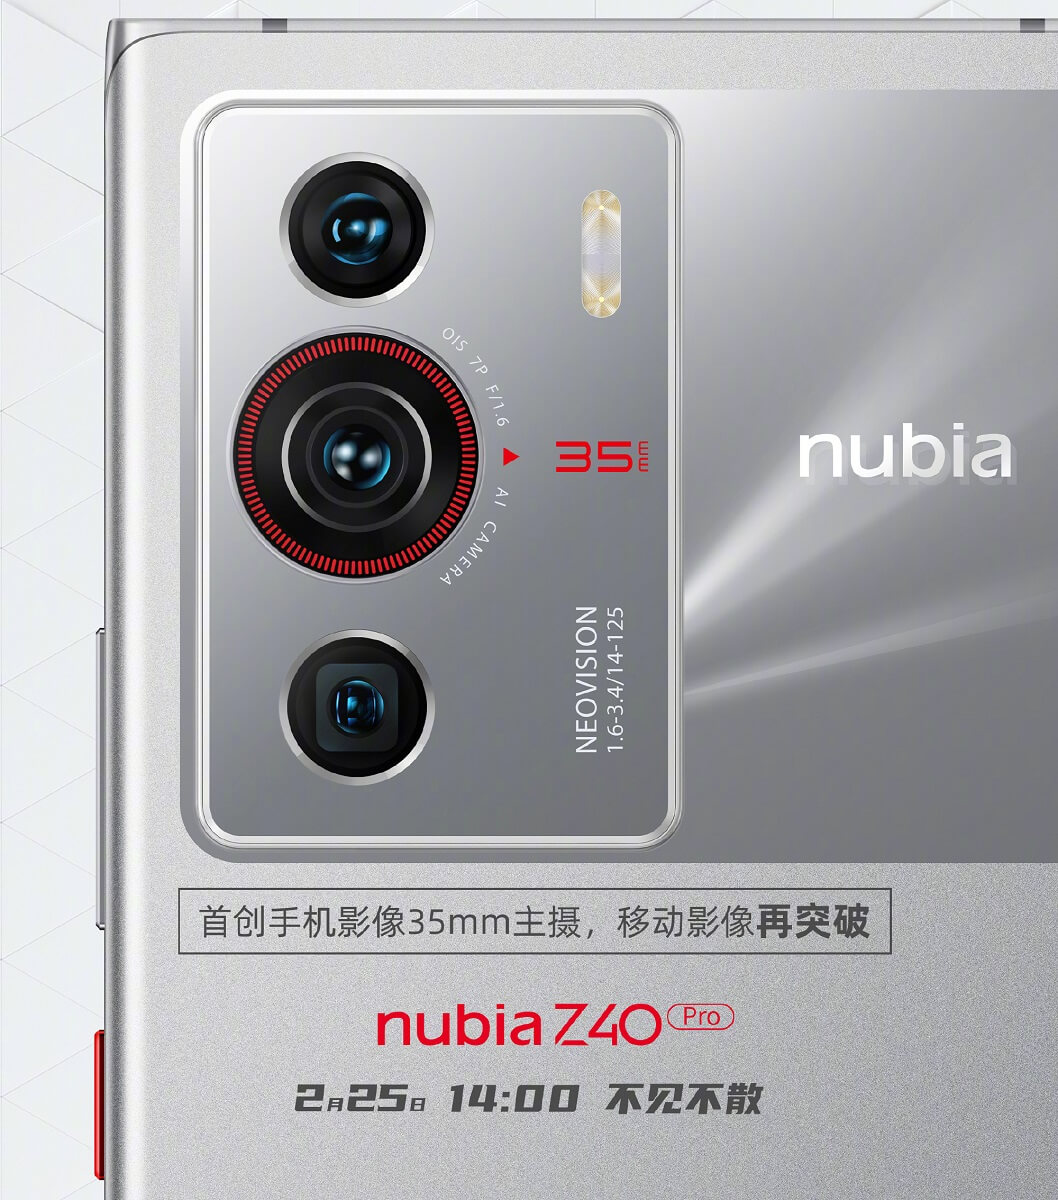 Nubia Z40 Pro camera feature